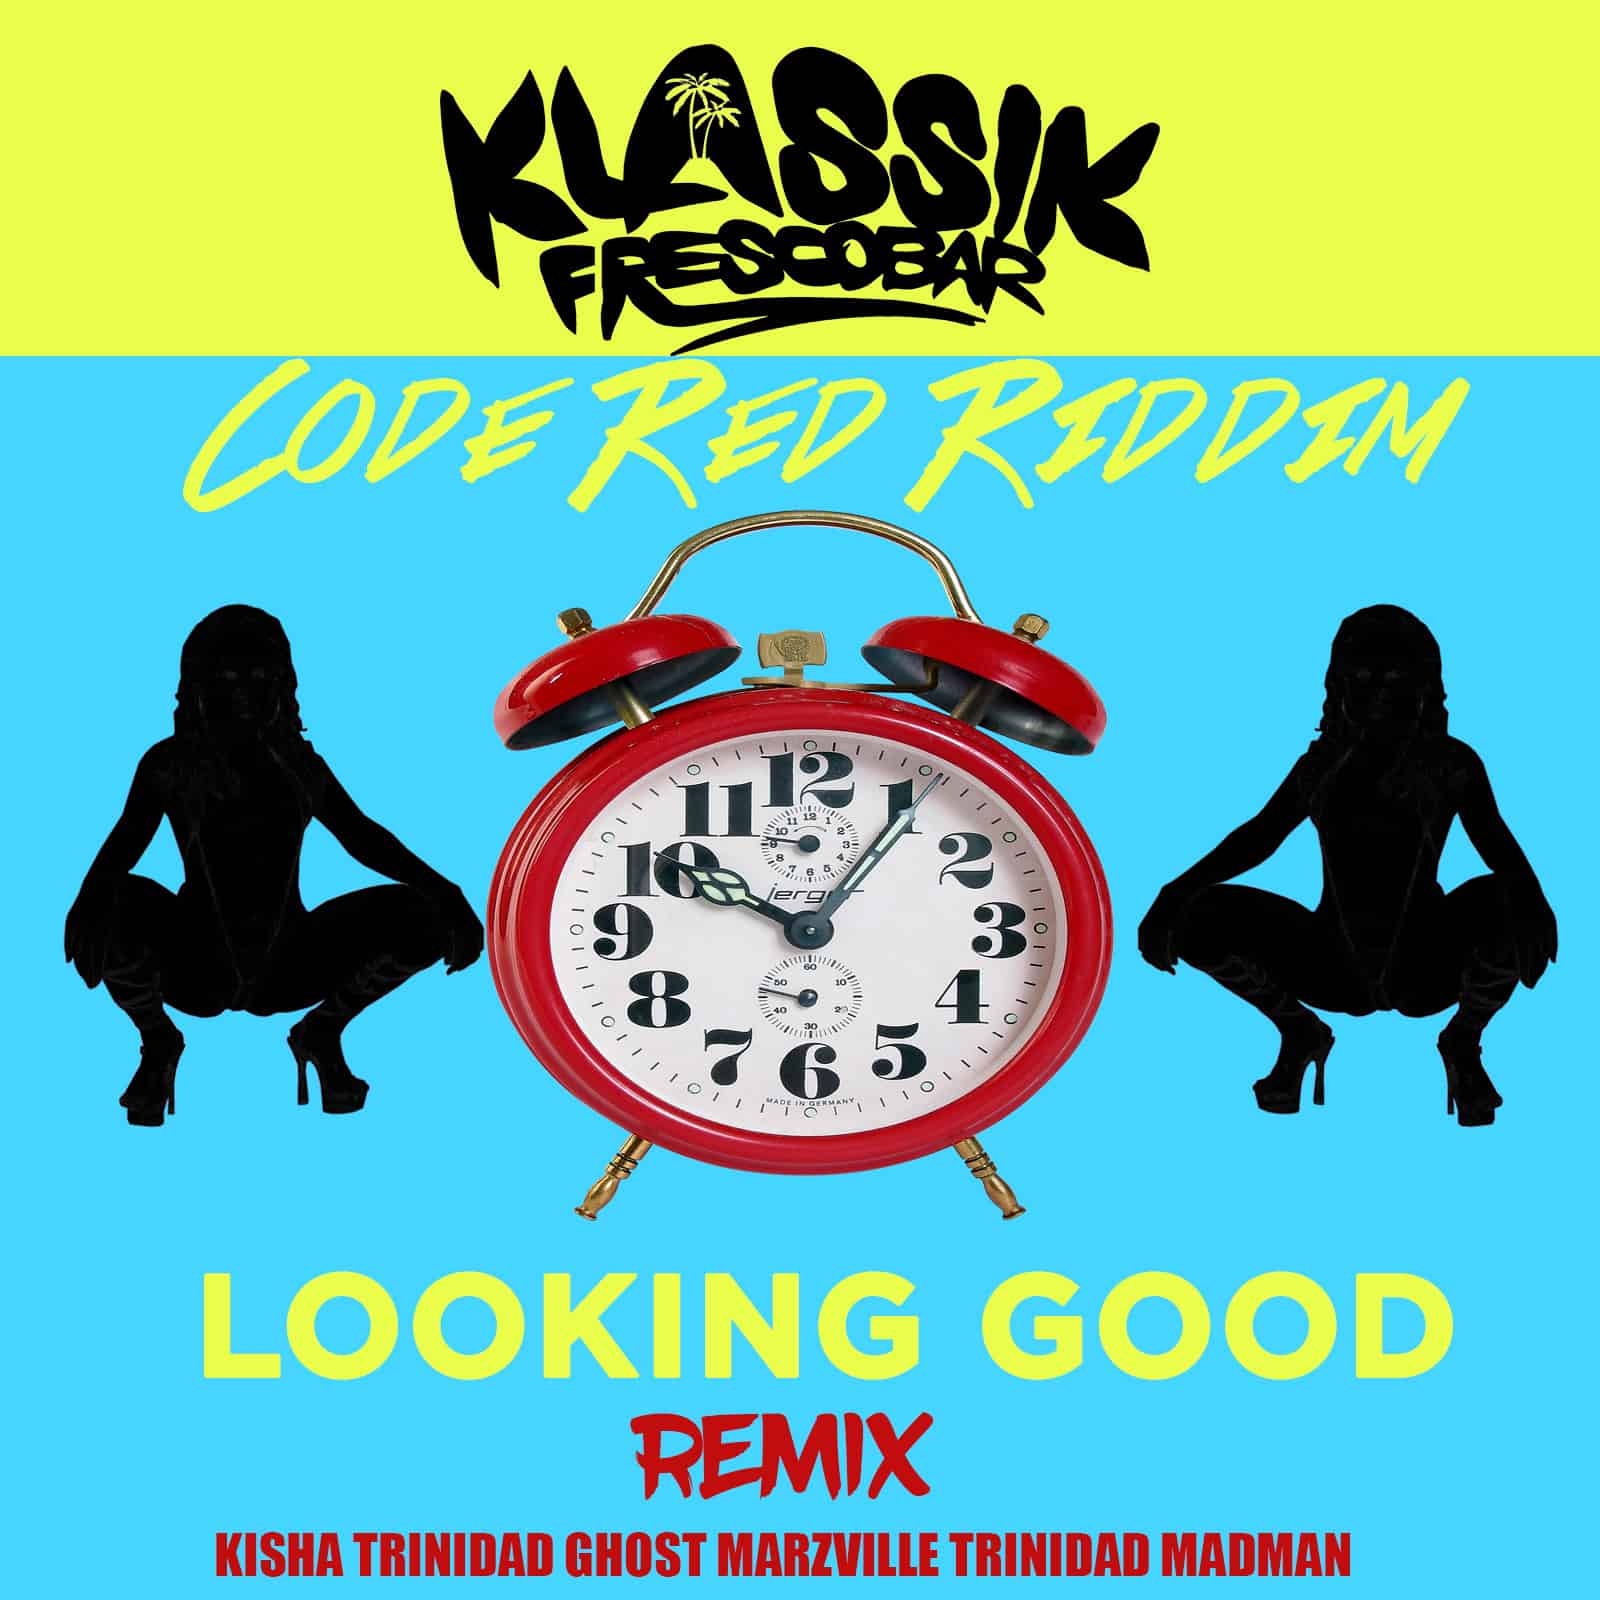 Klassik Frescobar x Kisha x Trinidad Ghost x Marzville x Trinidad Madman - Looking Good Remix